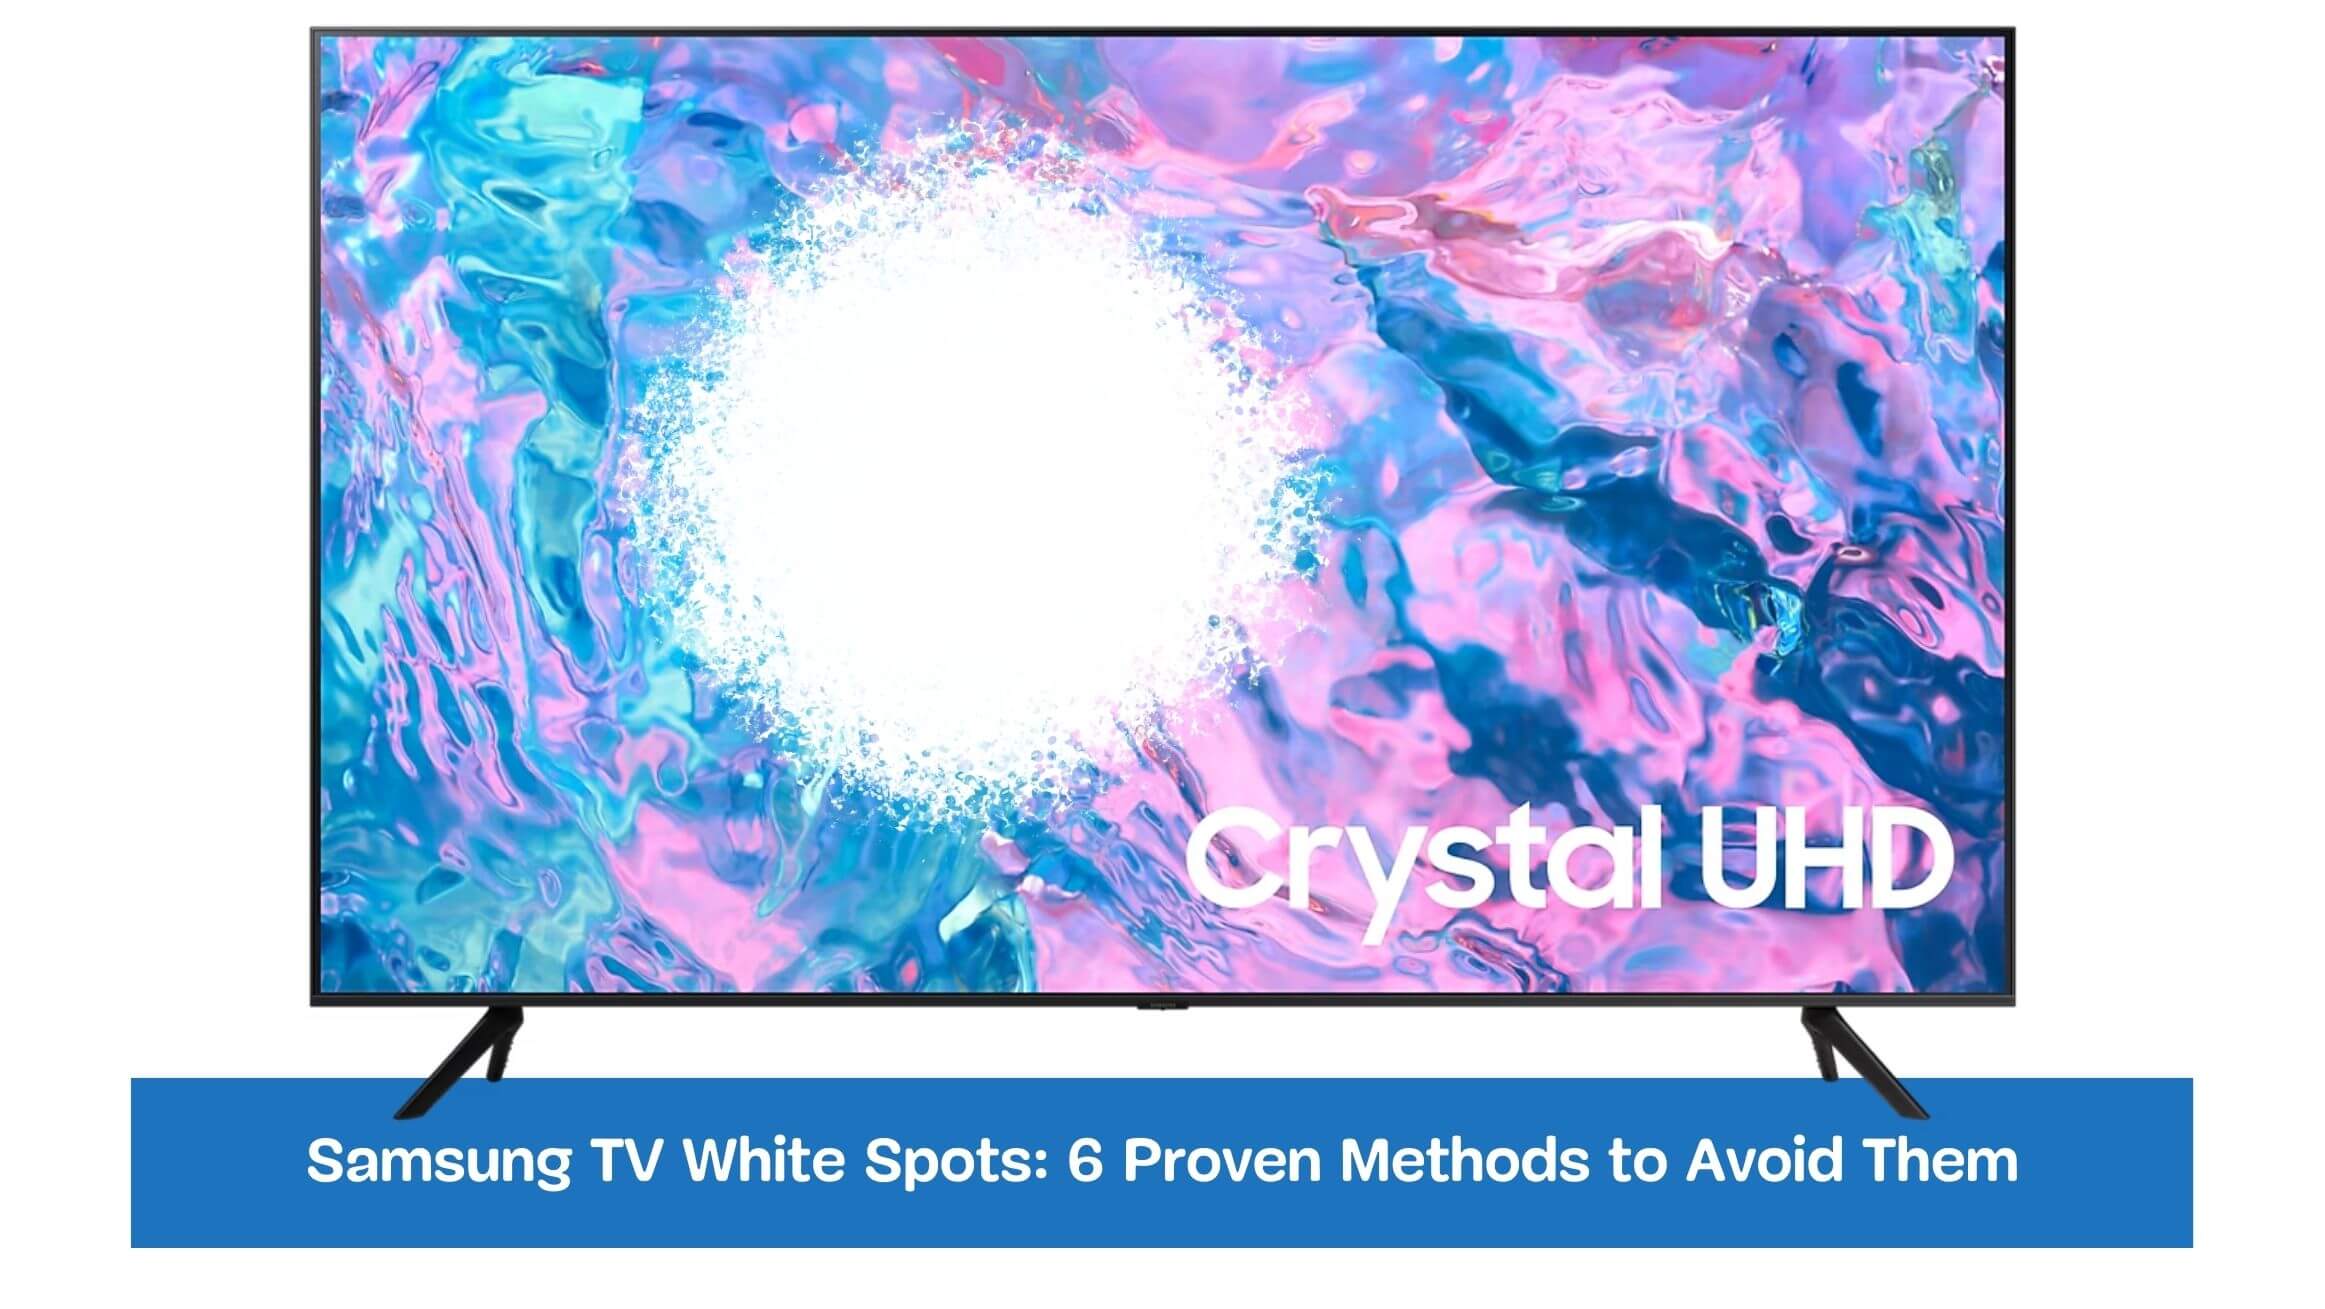 Samsung TV White Spots: 6 Proven Methods to Avoid Them